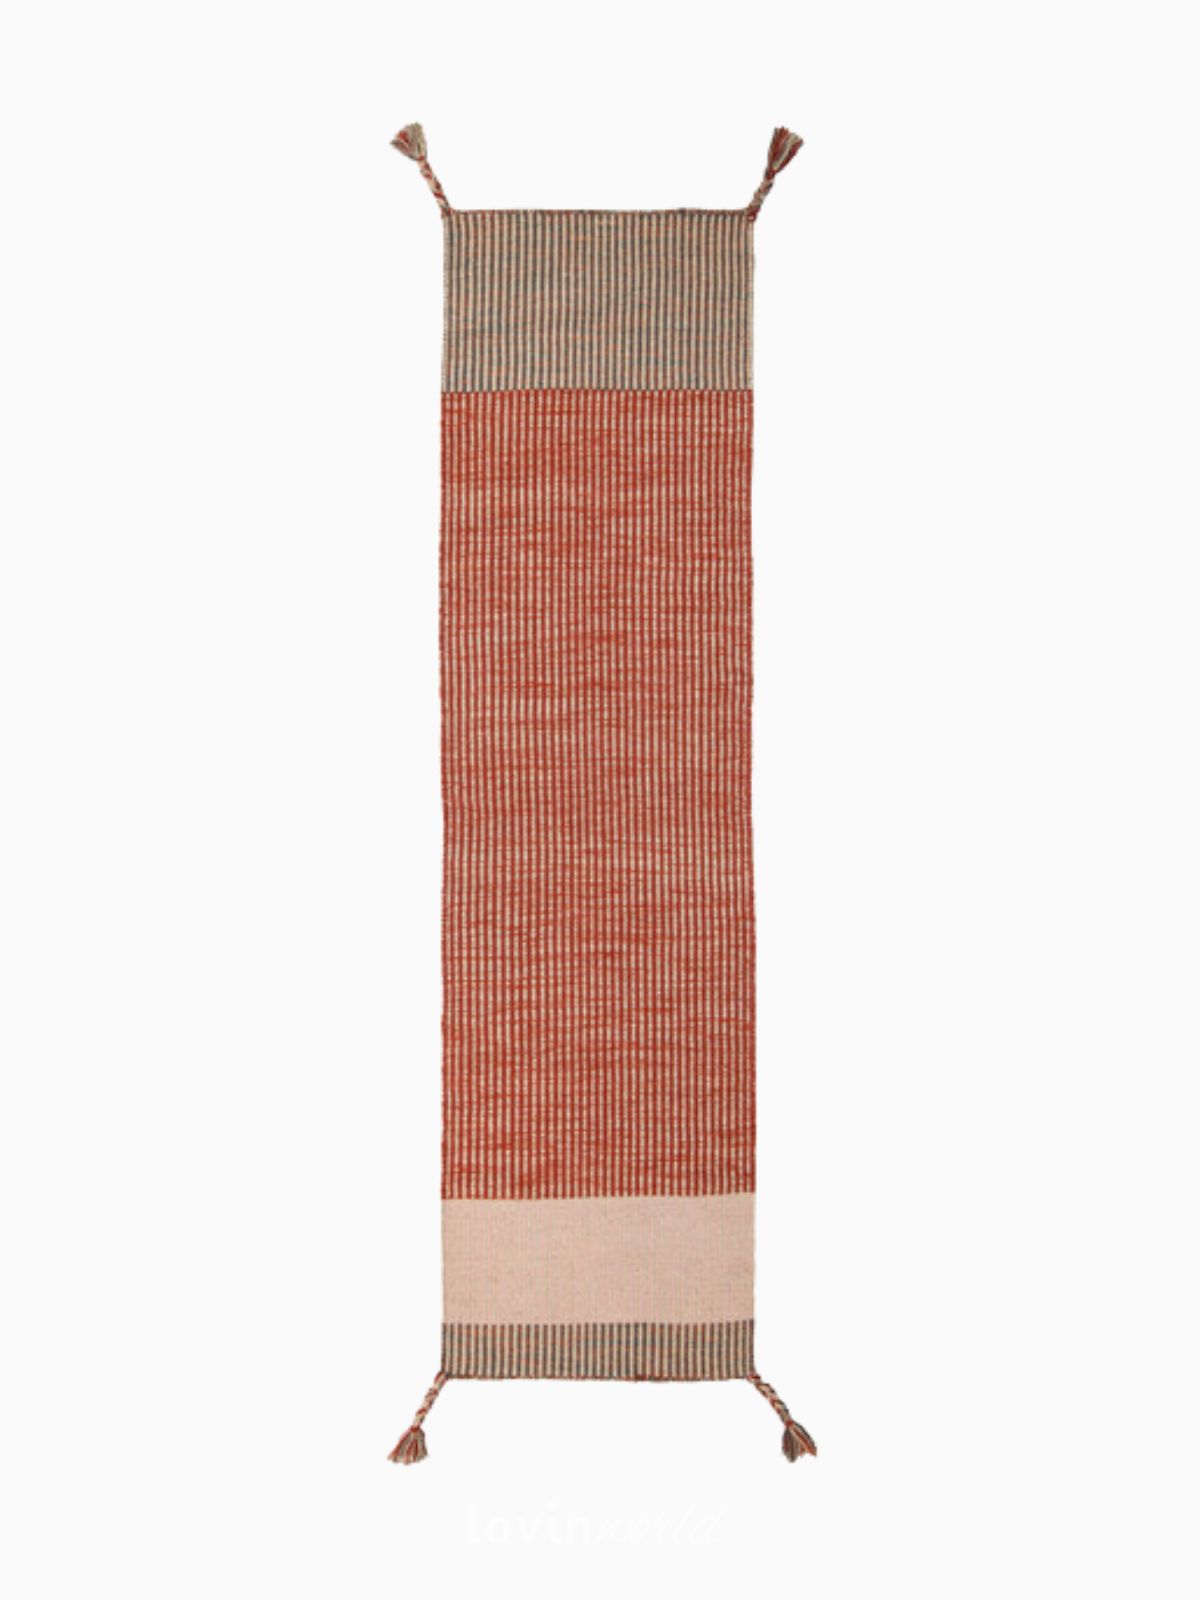 Runner Anu in lana, colore ruggine e multicolore 60x200 cm.-1